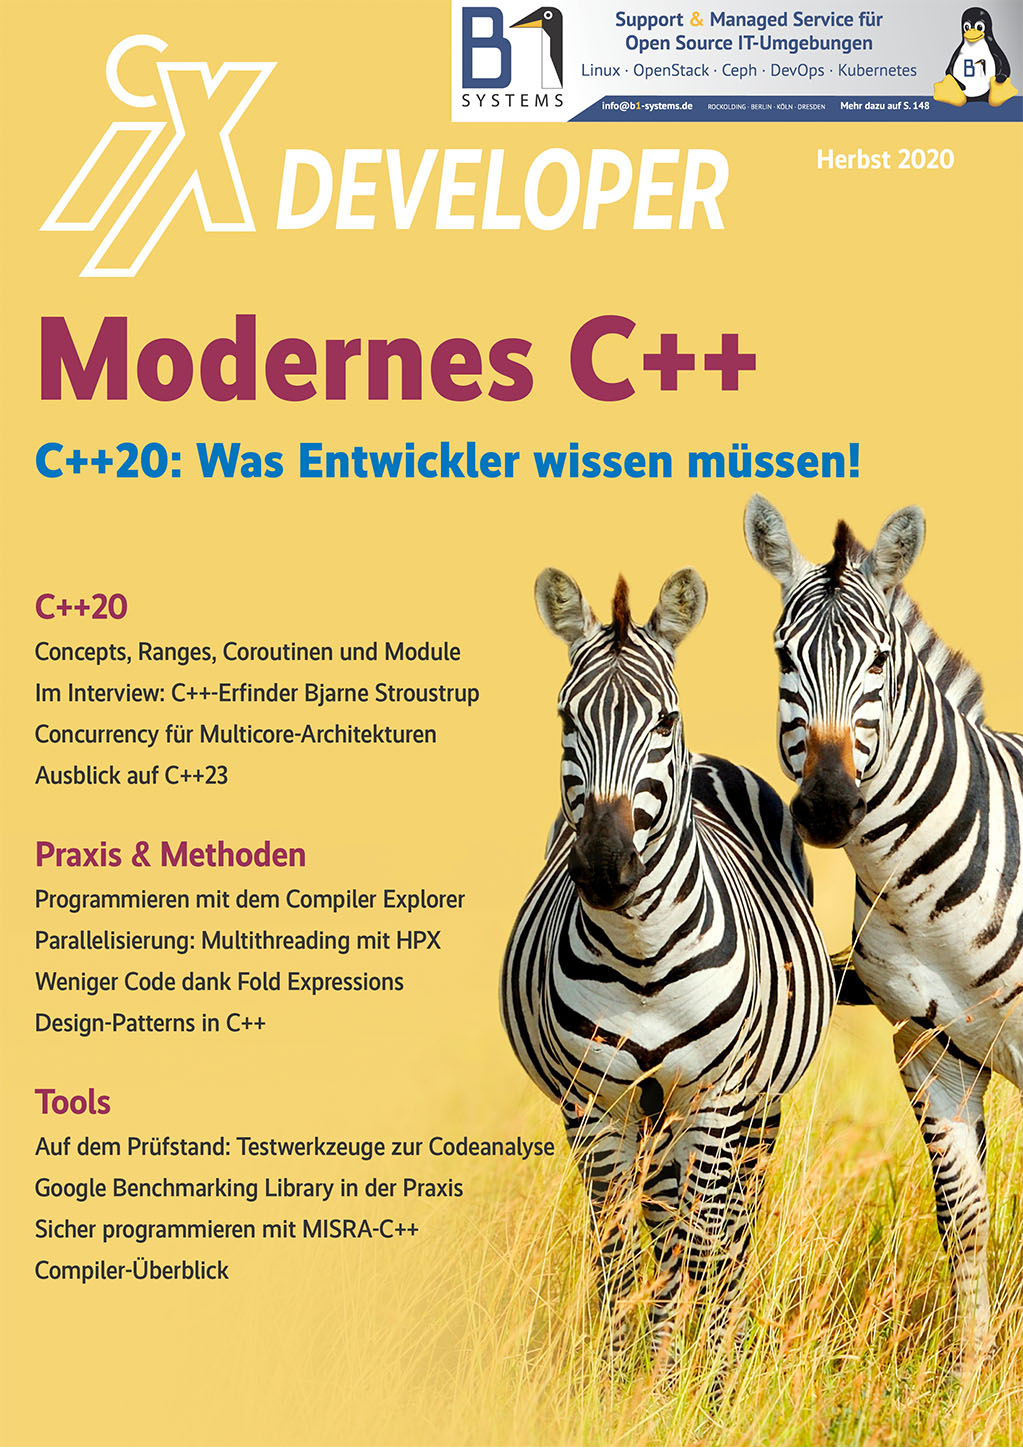 iX Developer - Modernes C++